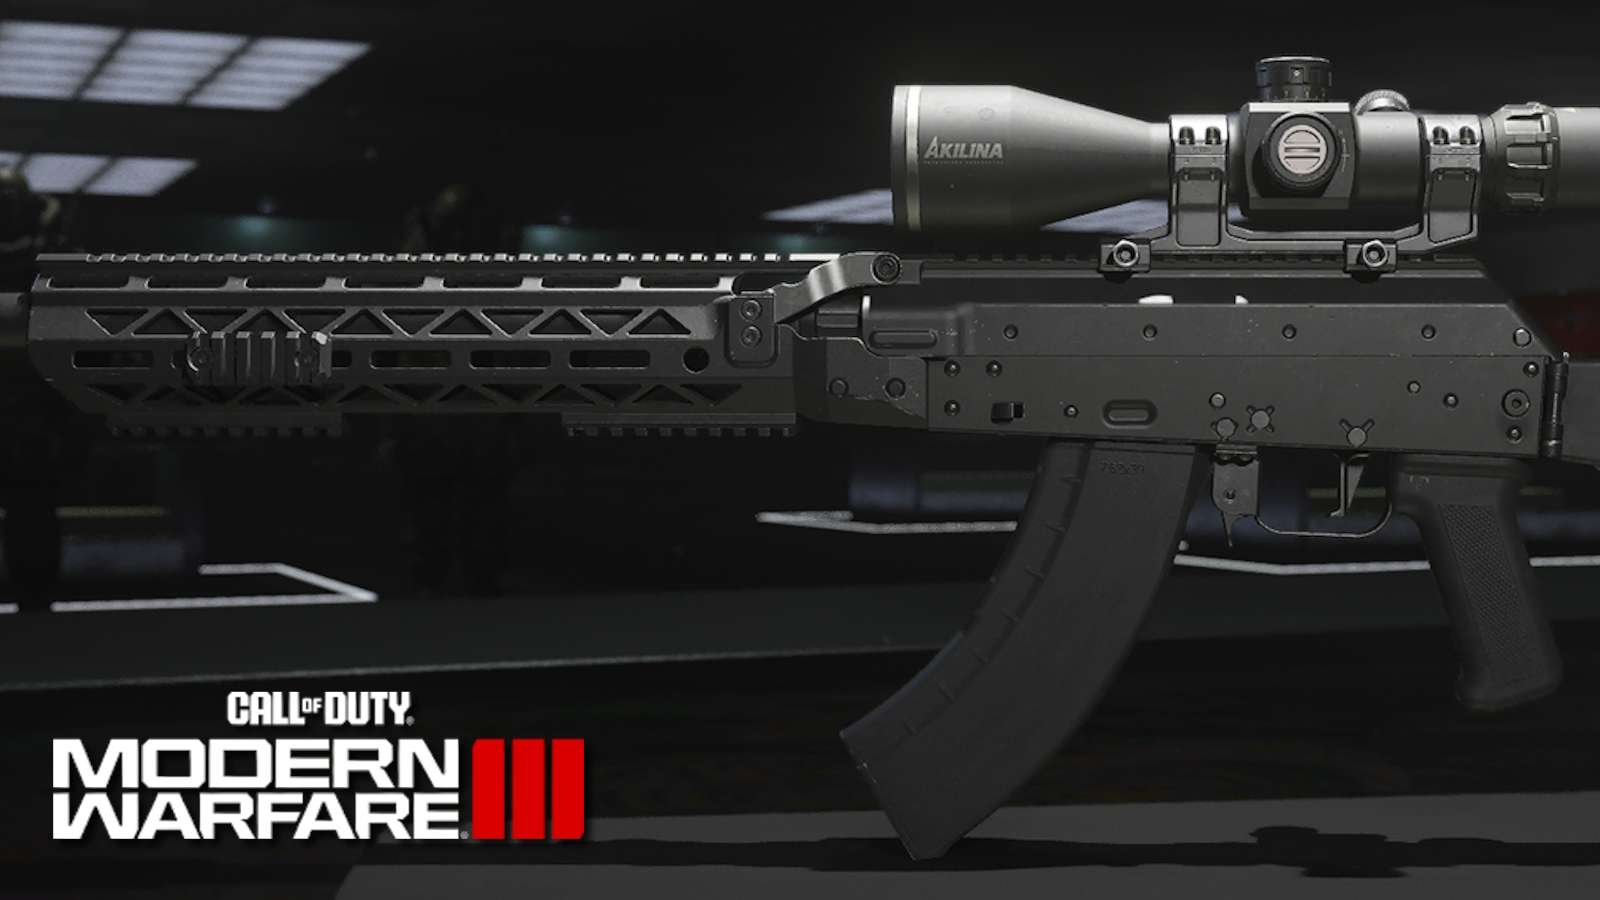 Longbow sniper rifle in Modern Warfare 3.